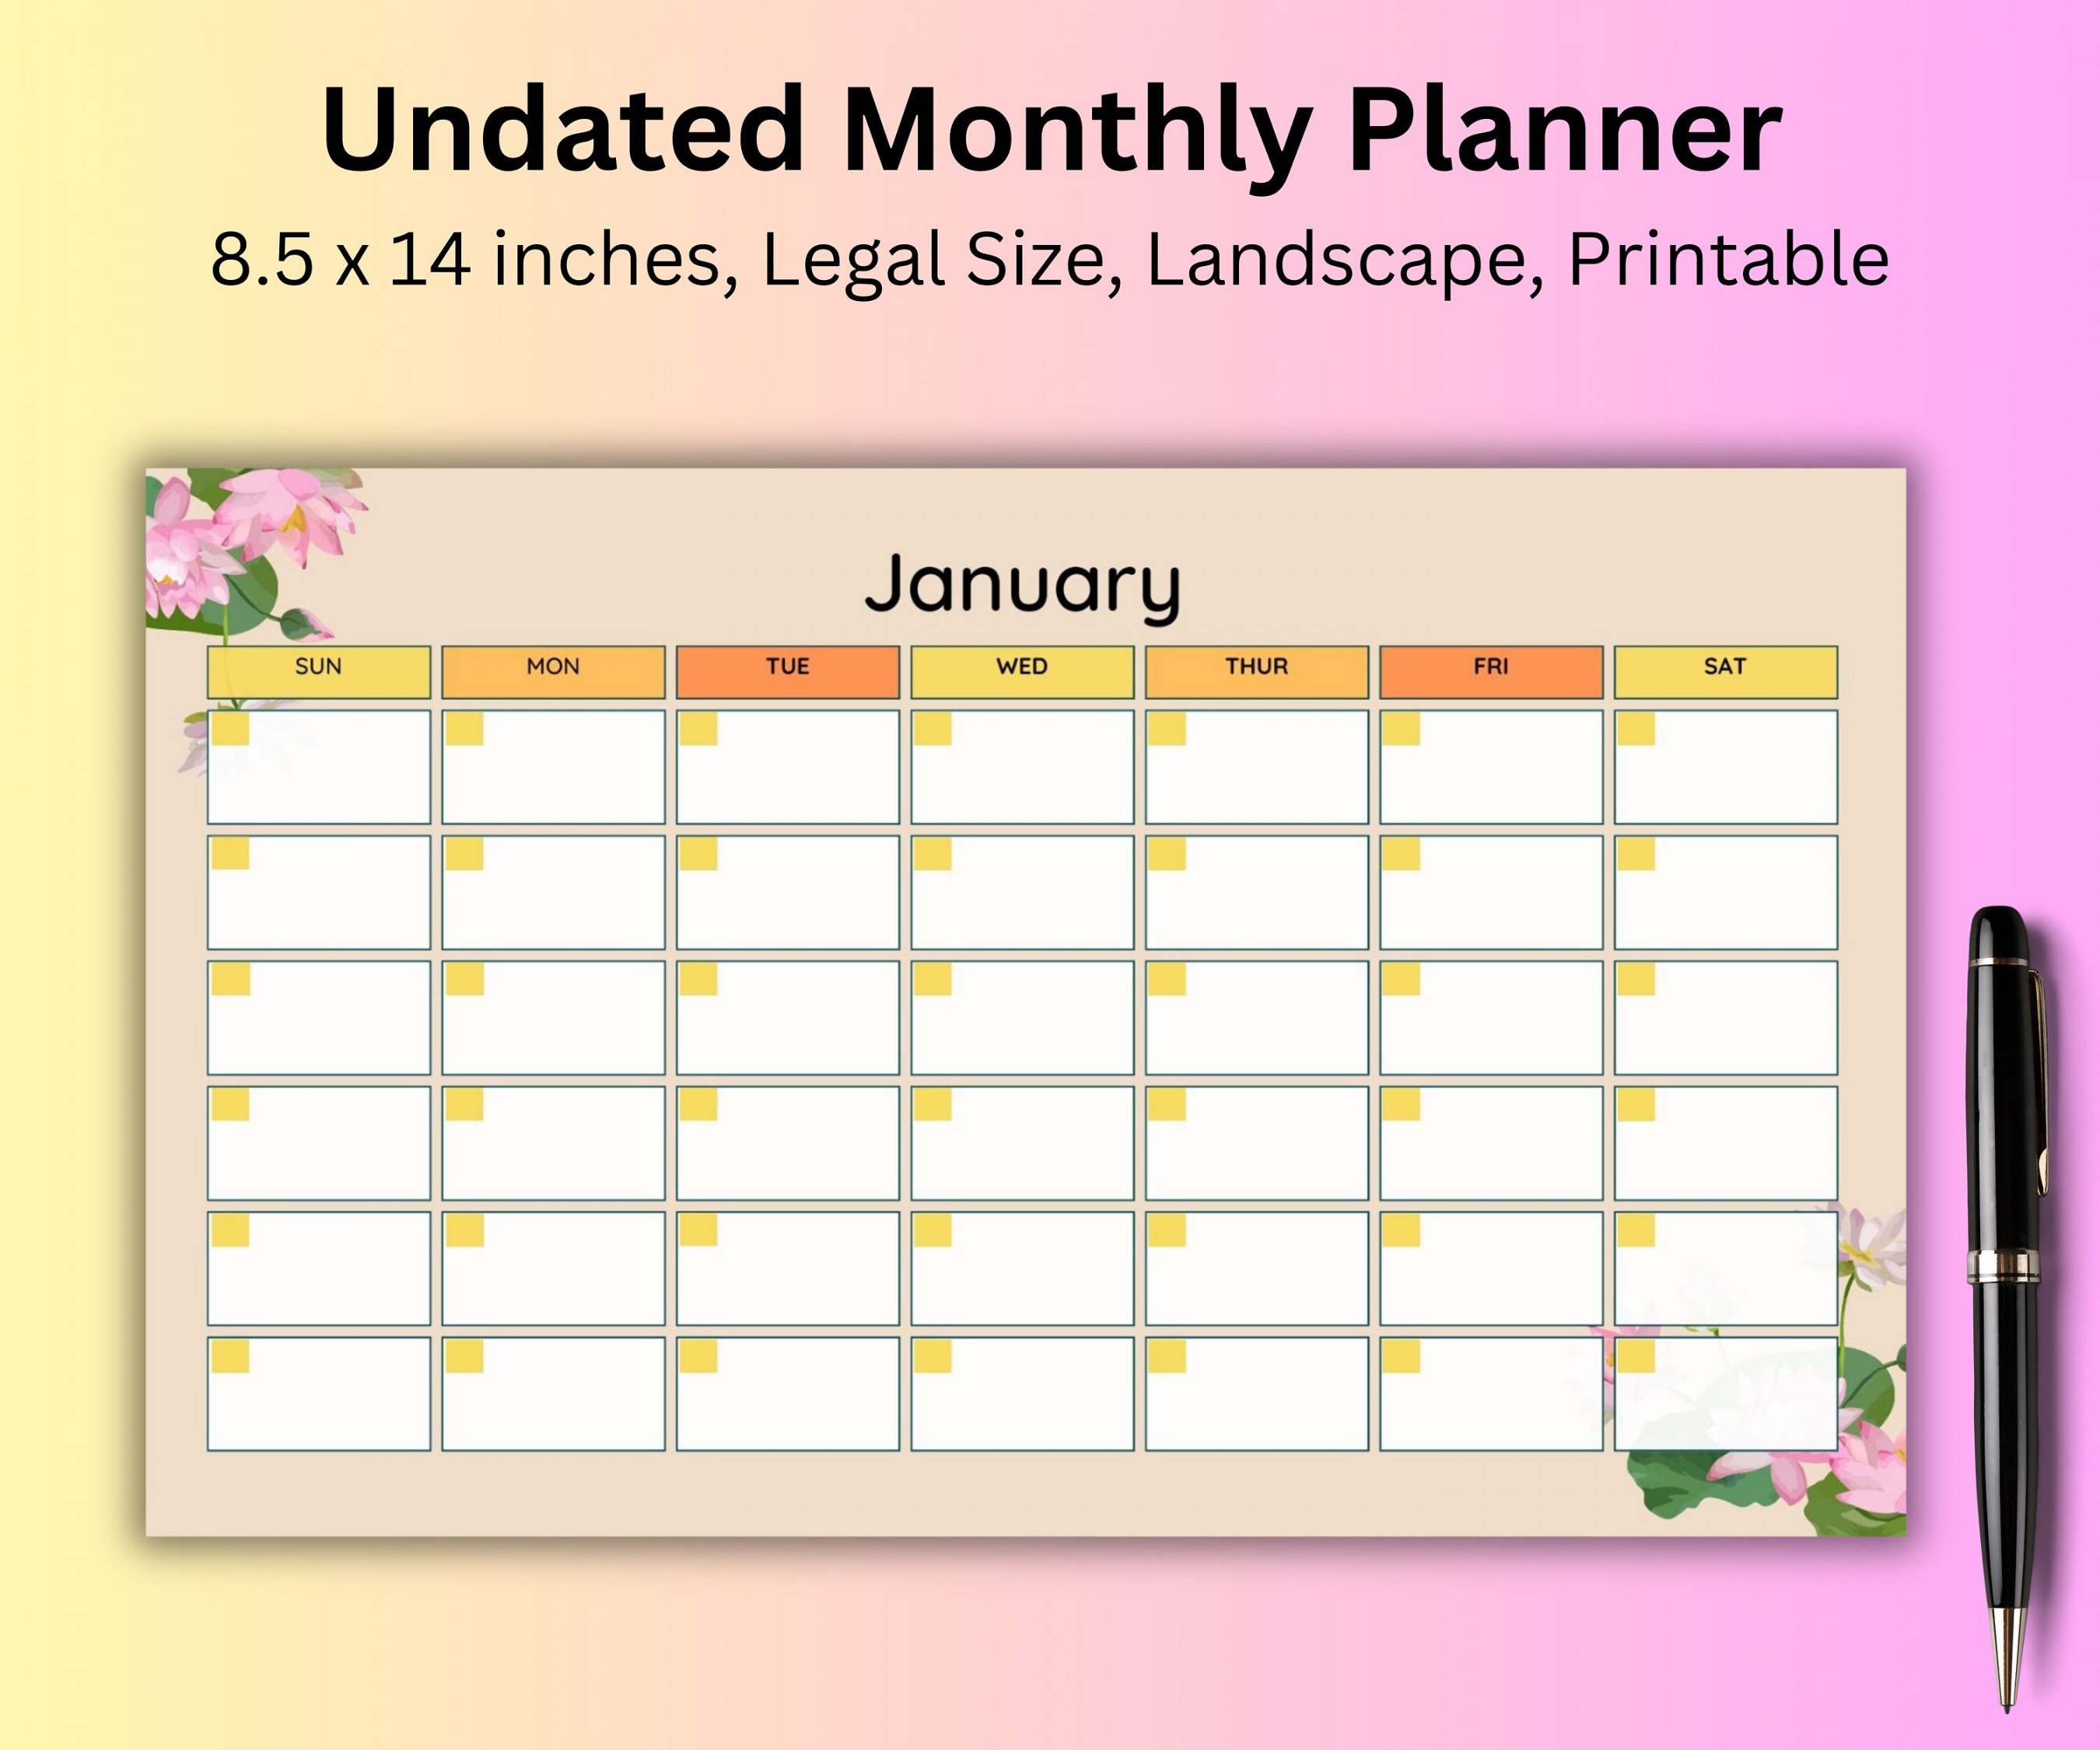 Undated Monthly Planner,